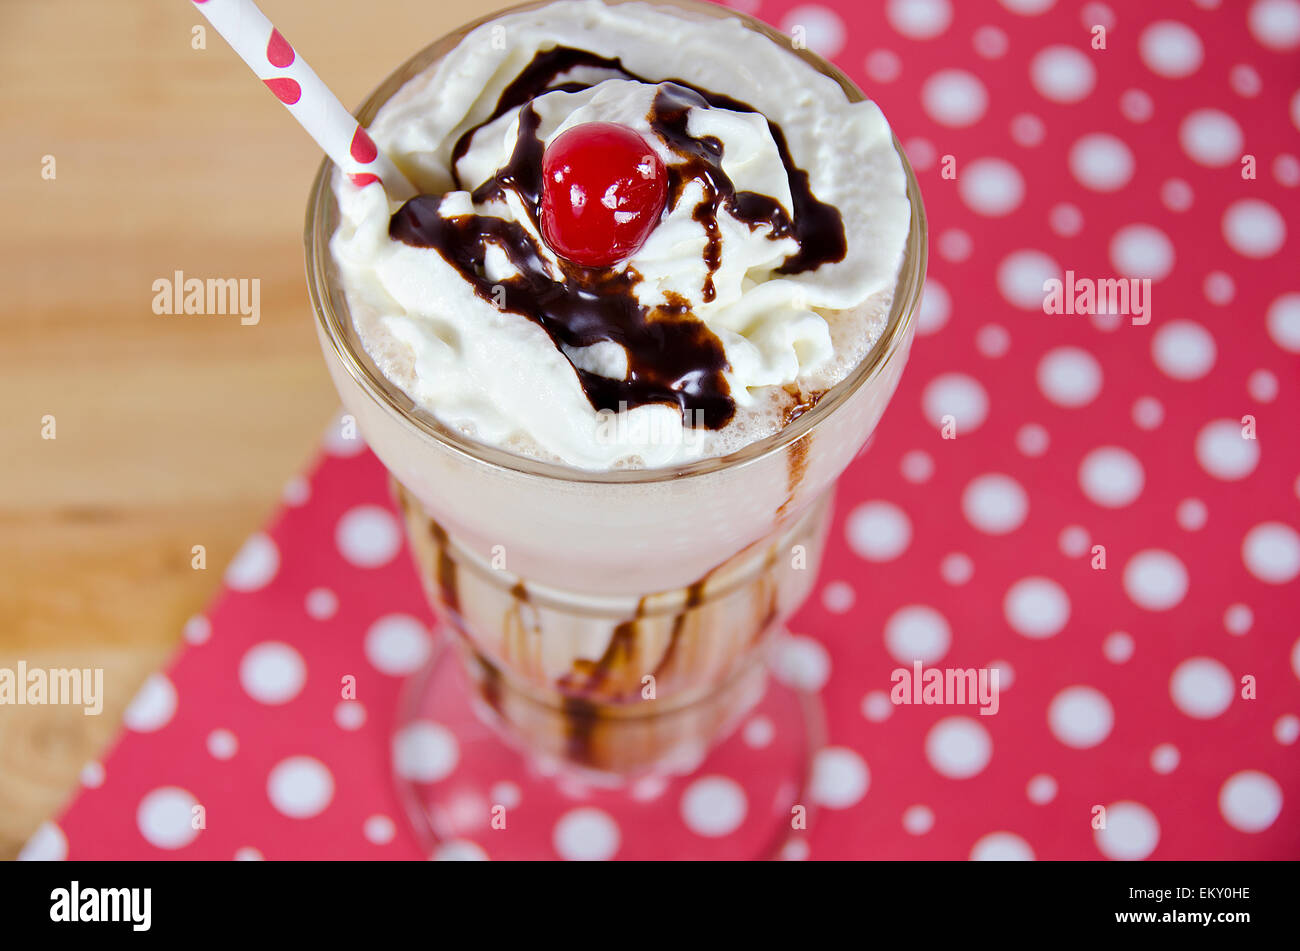 Ice cream sundae with drizzled chocolate and maraschino cheery and polka dot straw. Stock Photo